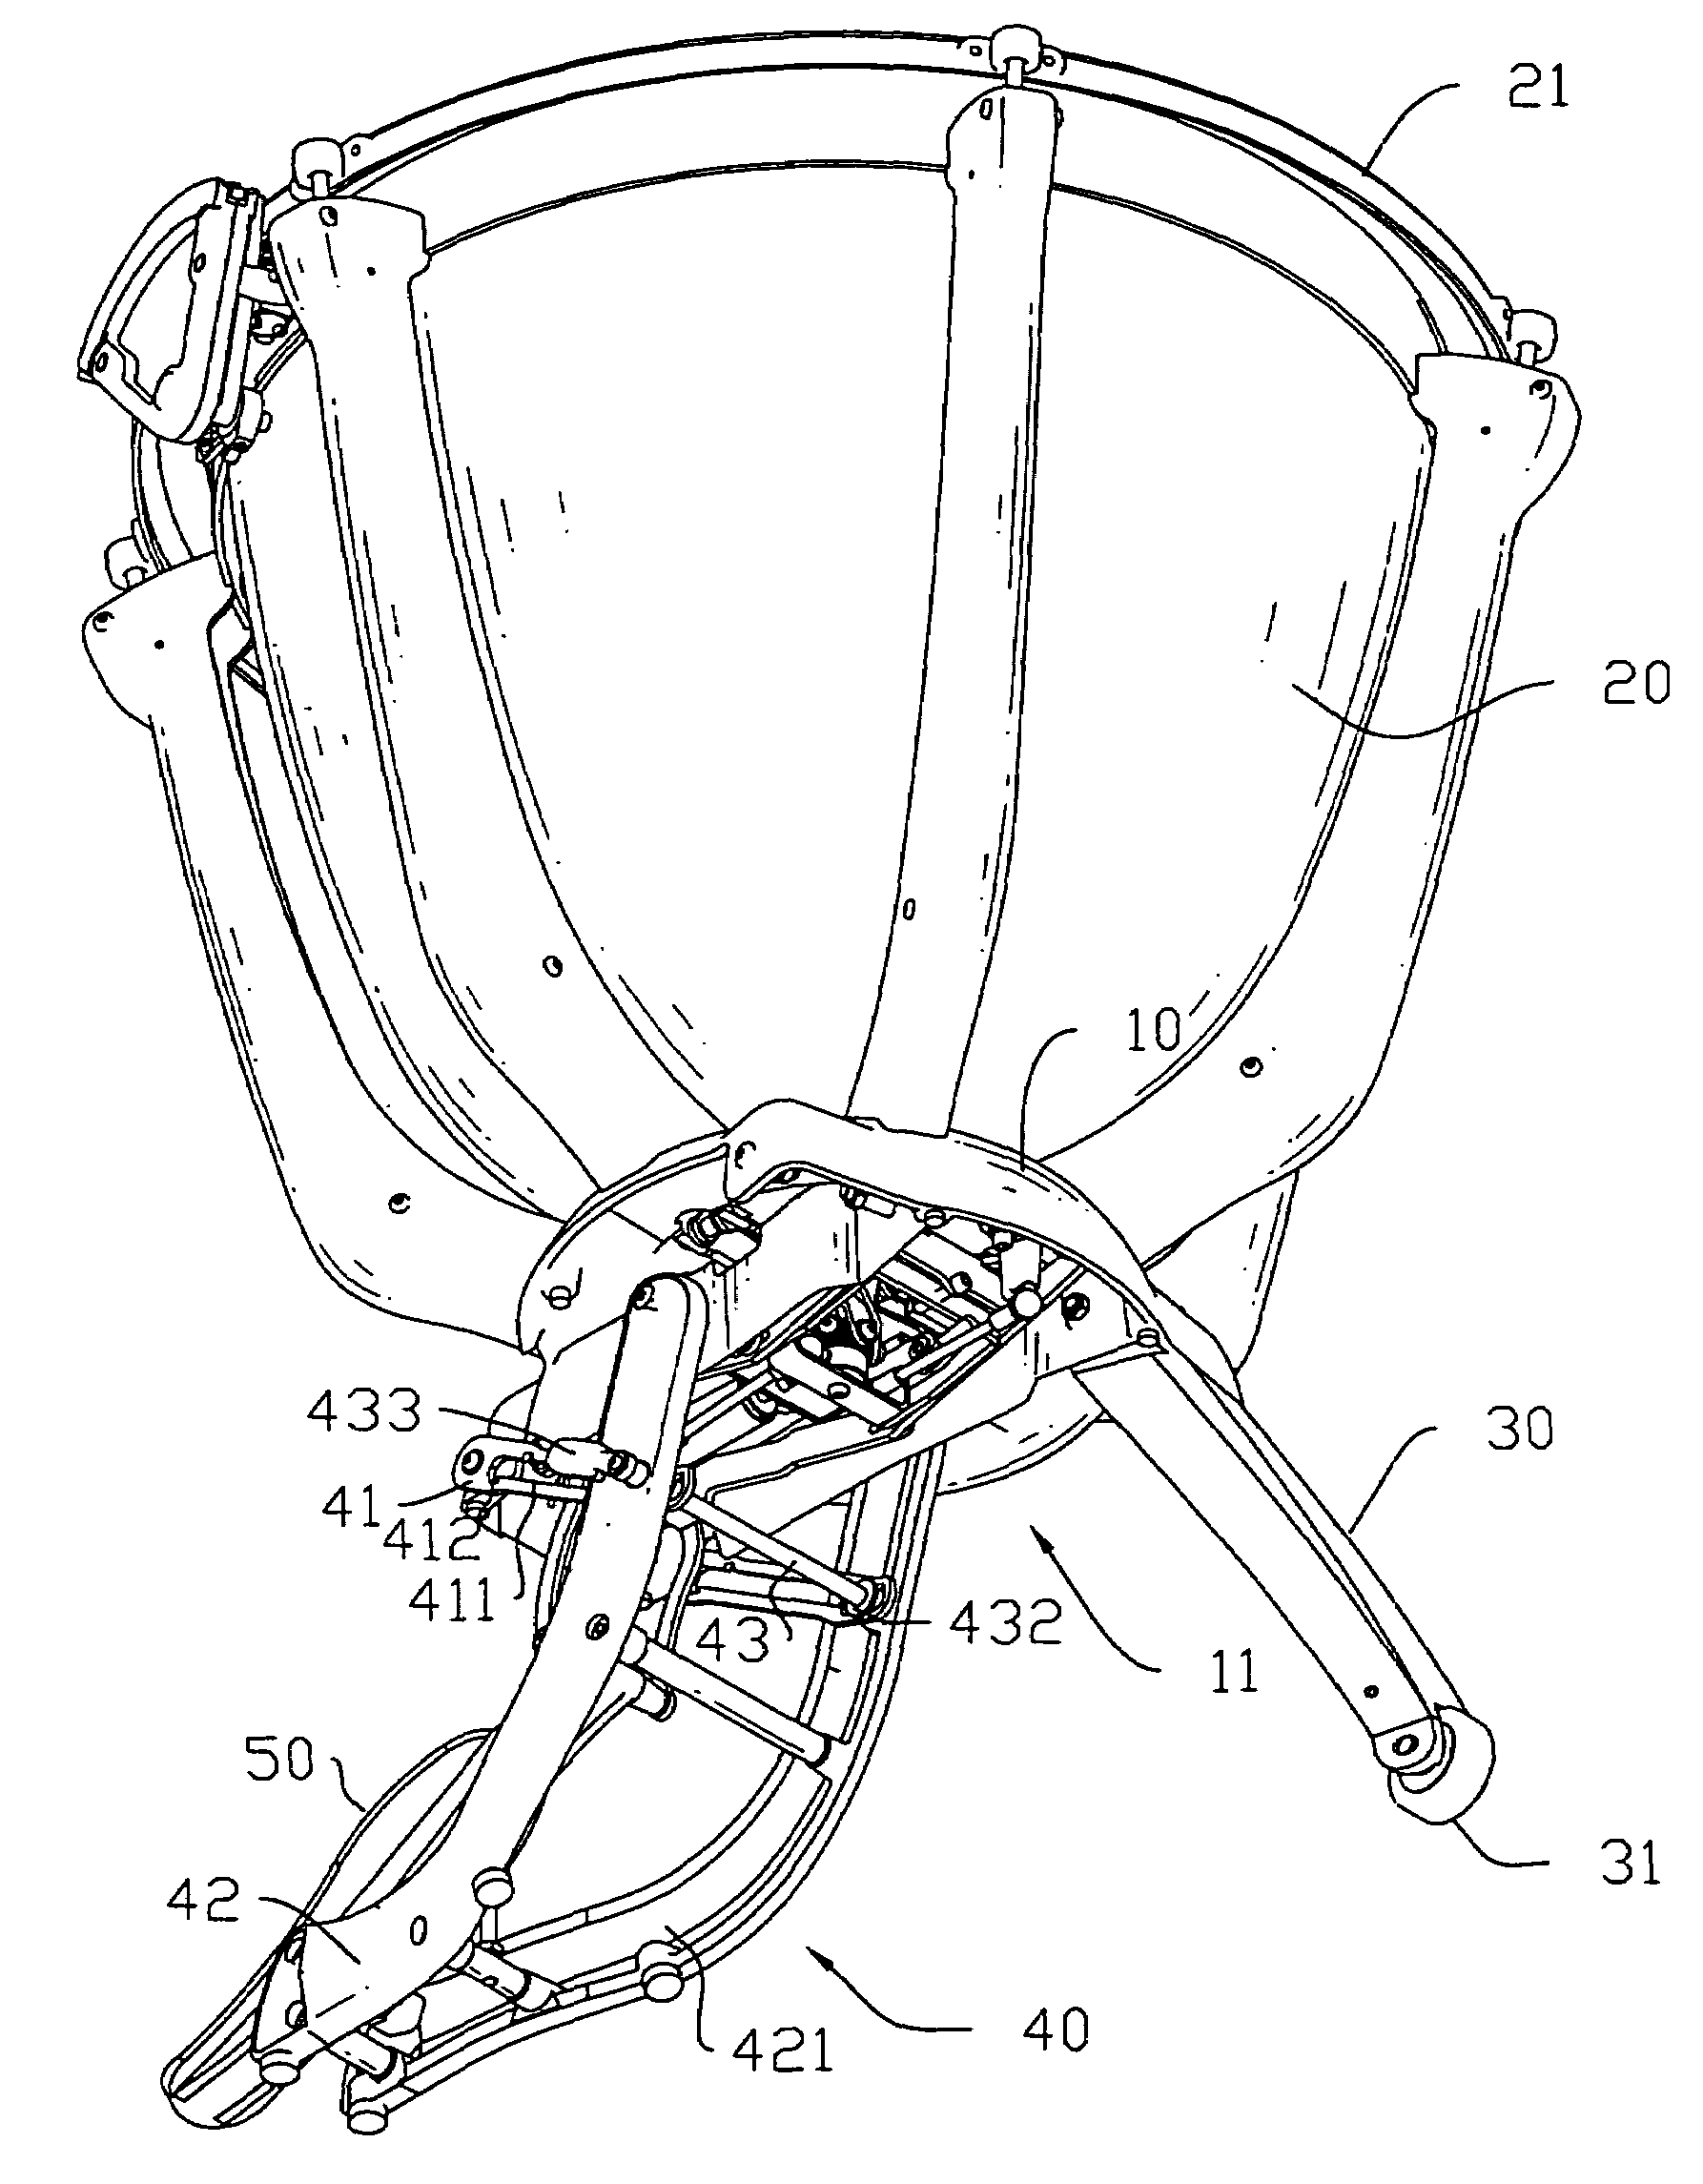 Timpani with a foldable leg assembly